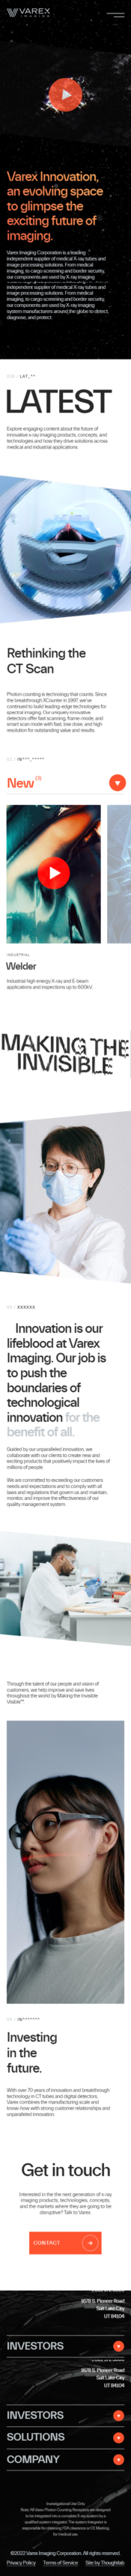 Varex imaging business & corporate clean